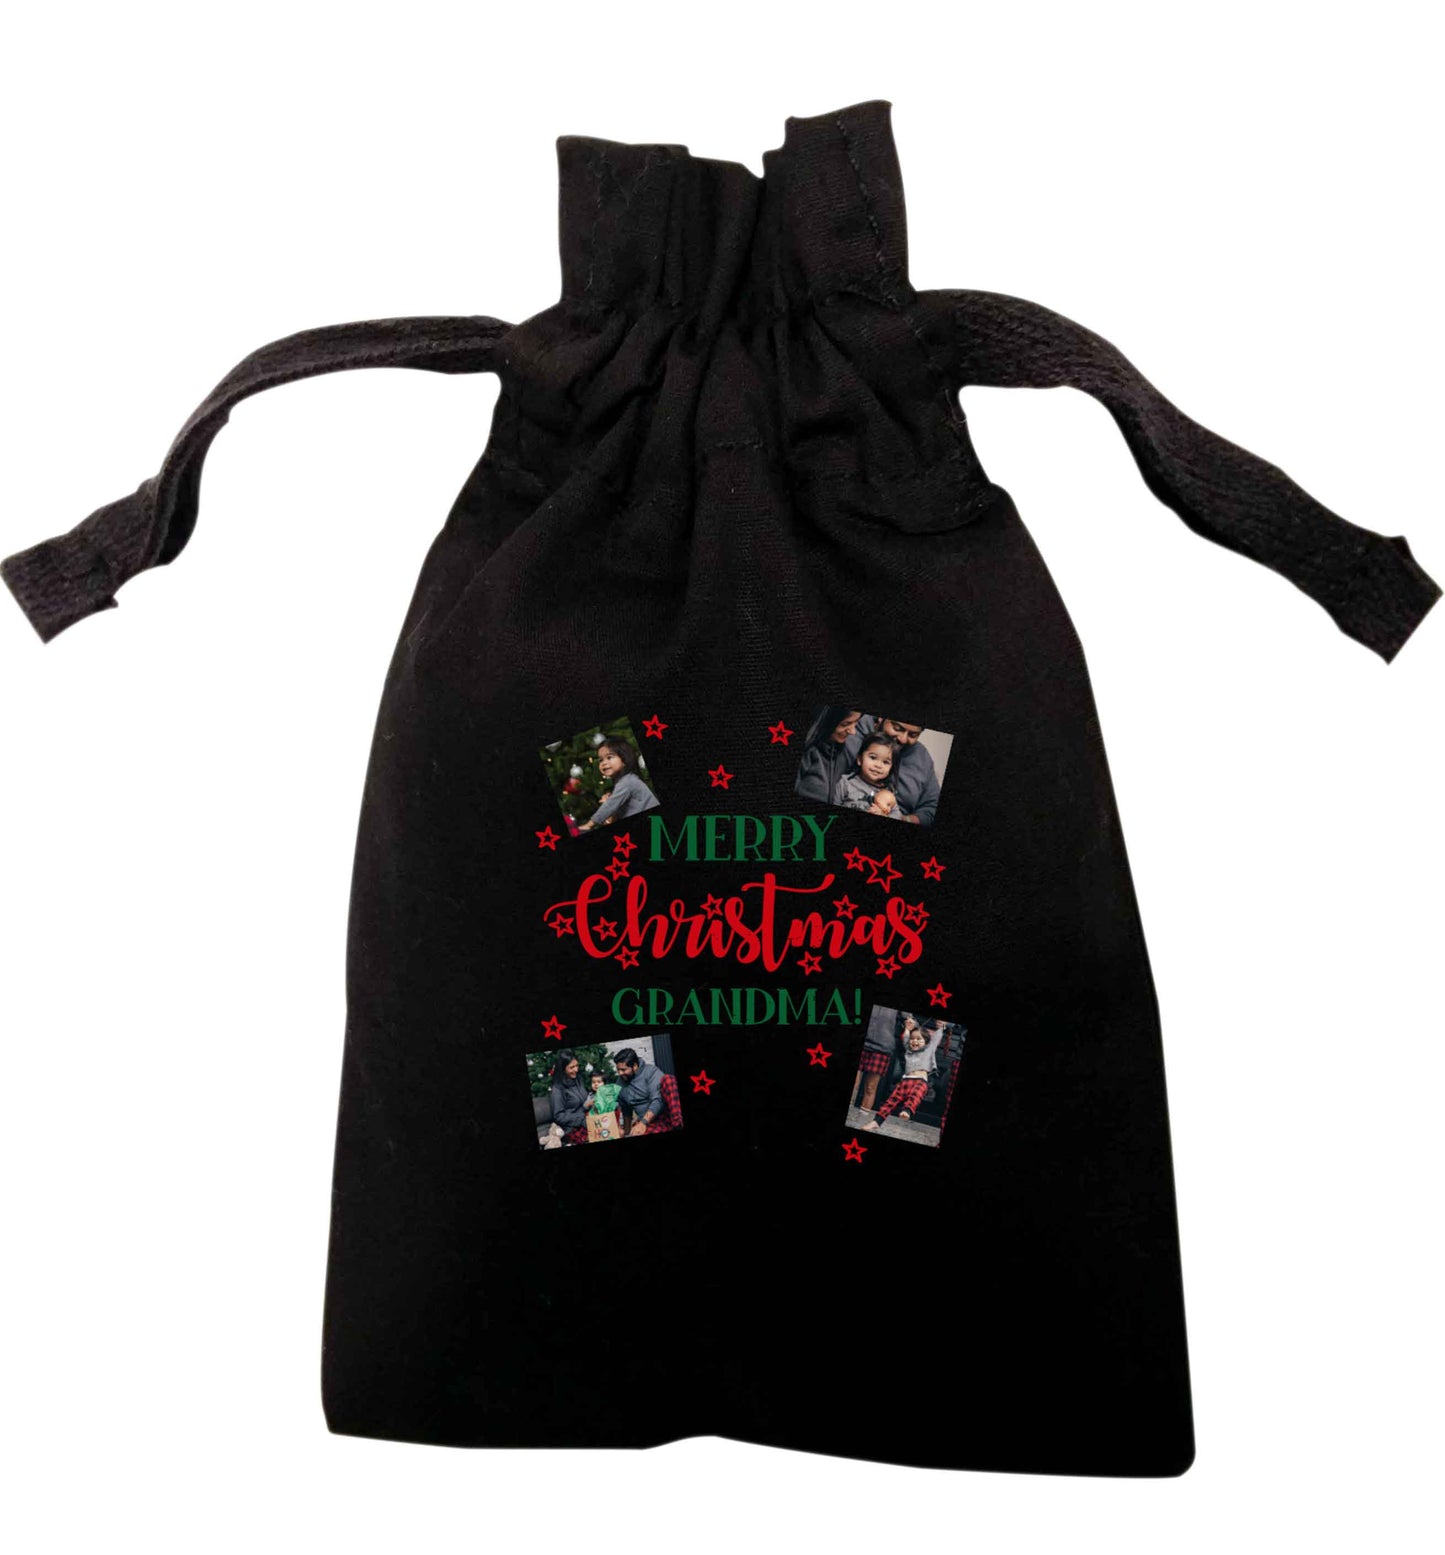 Merry Christmas grandma | XS - L | Pouch / Drawstring bag / Sack | Organic Cotton | Bulk discounts available!